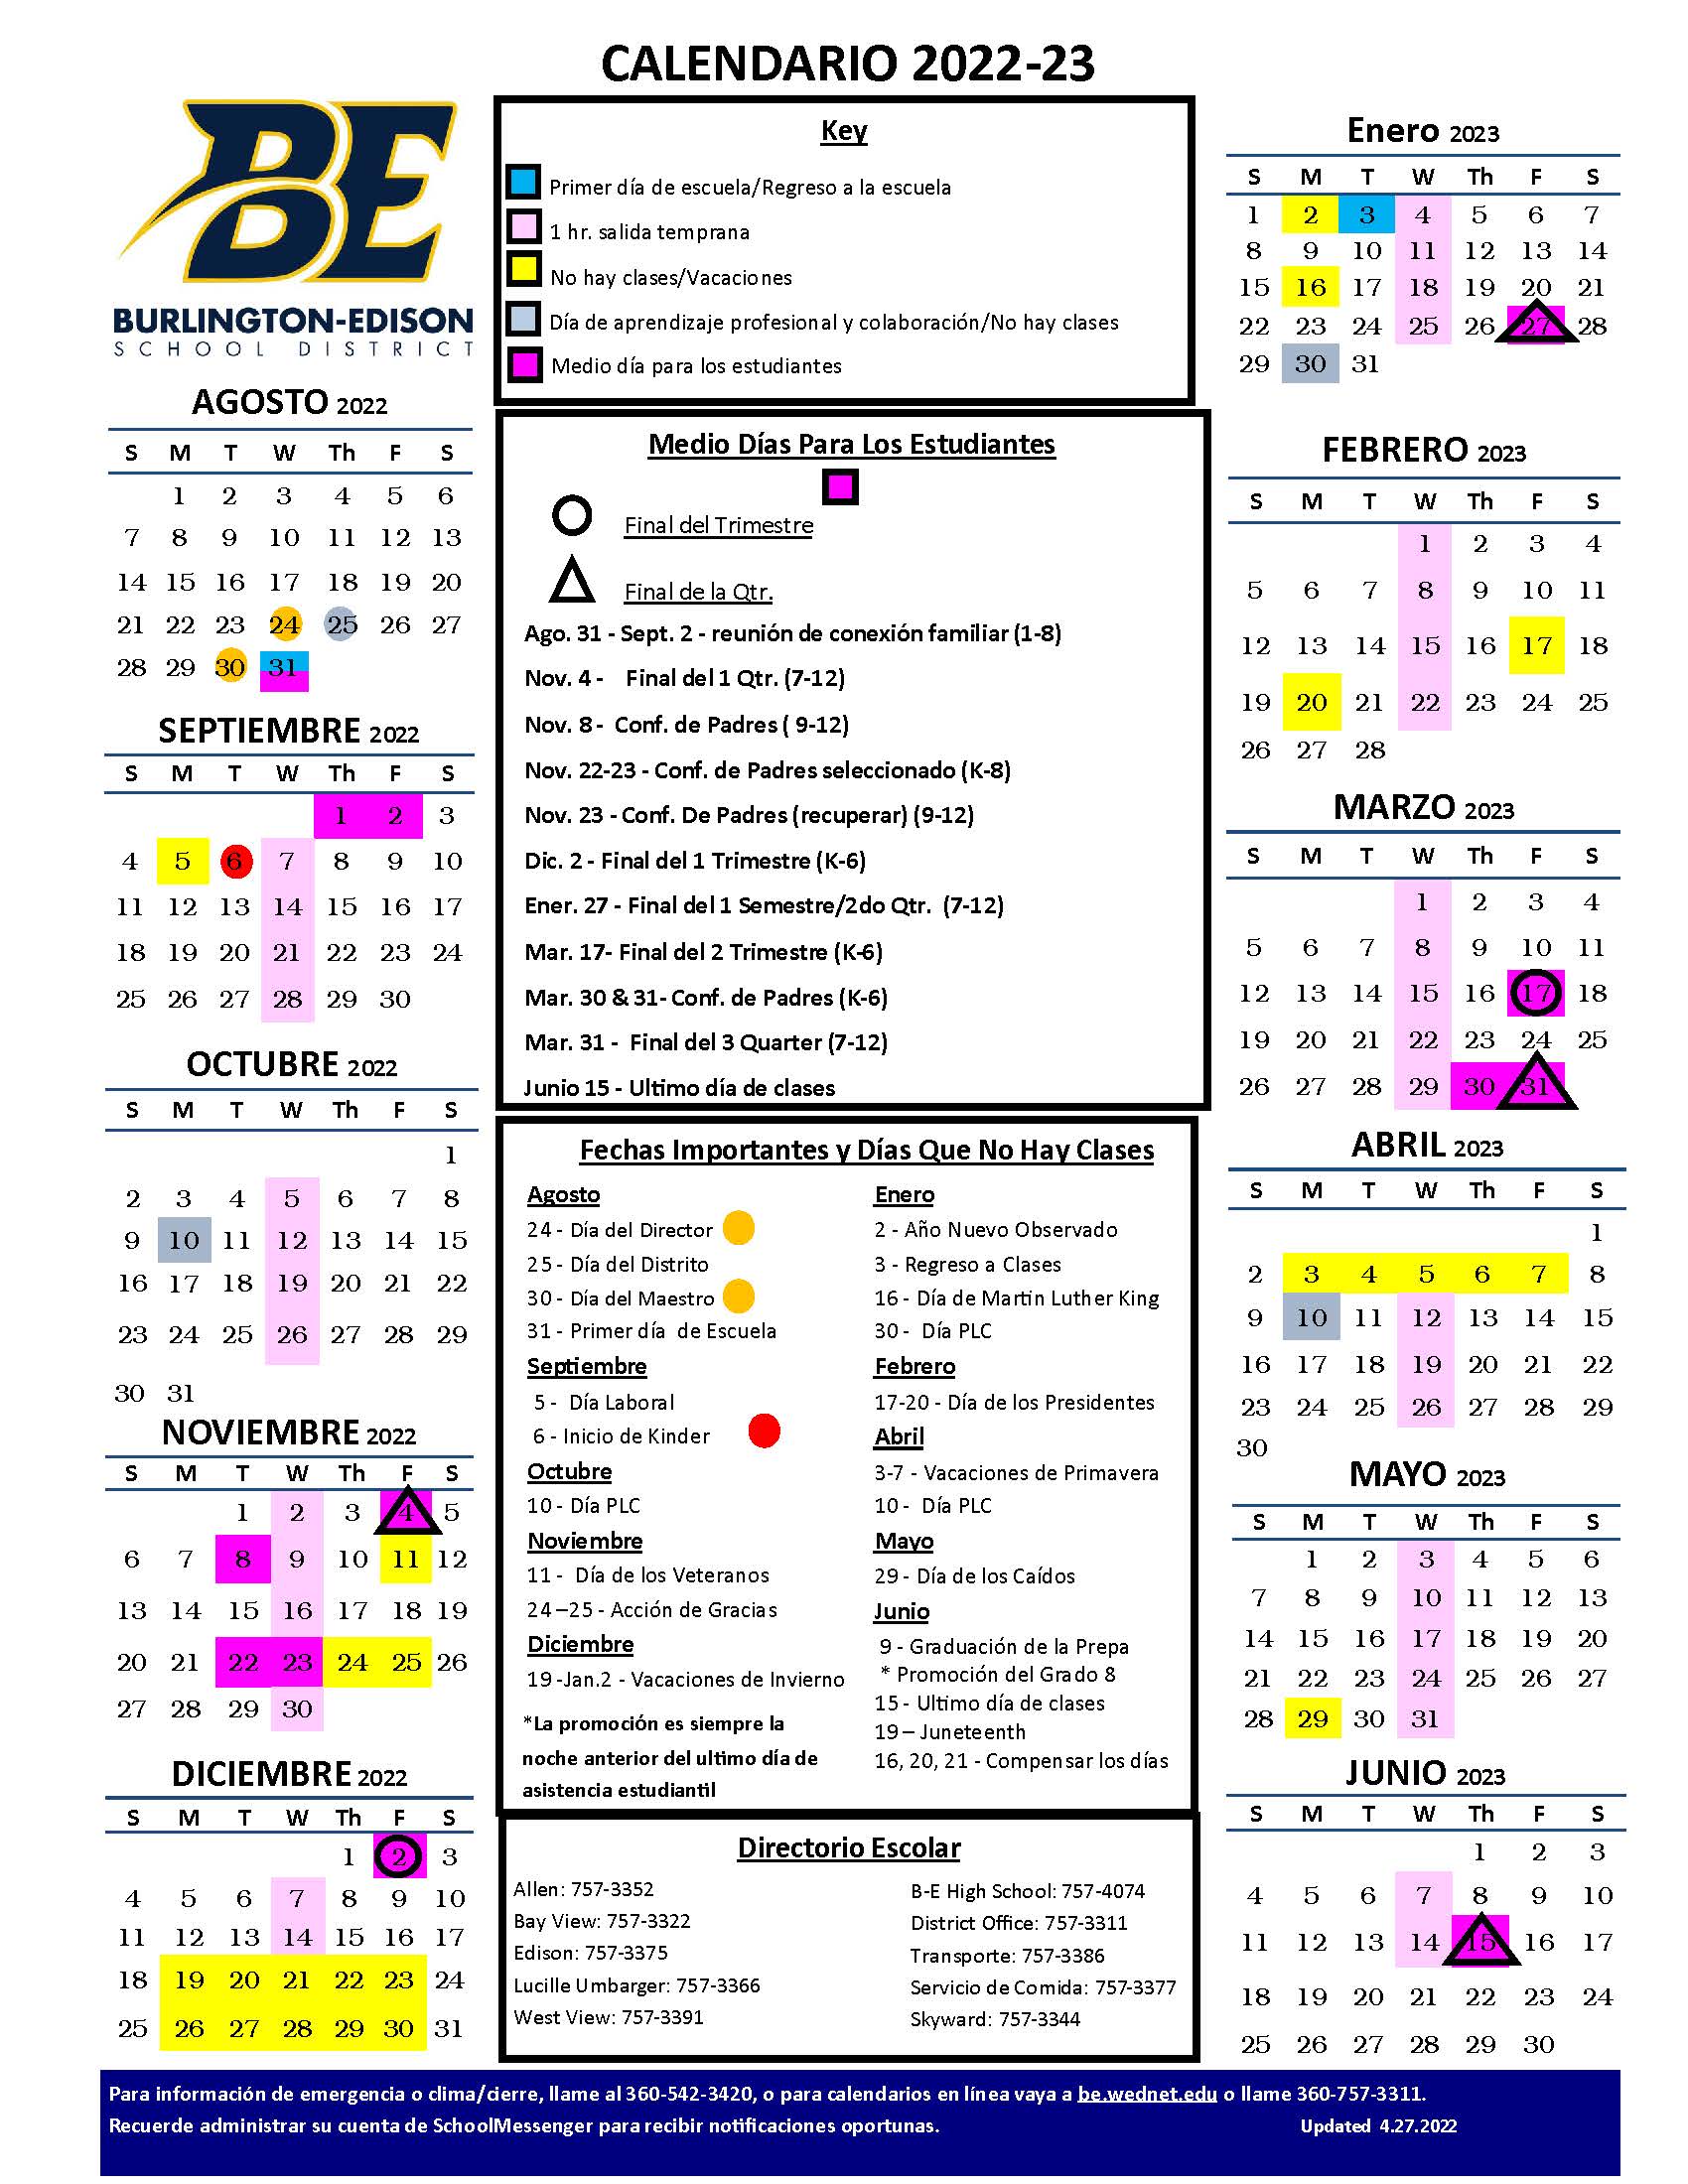 Spanish Version Year Long Calendar